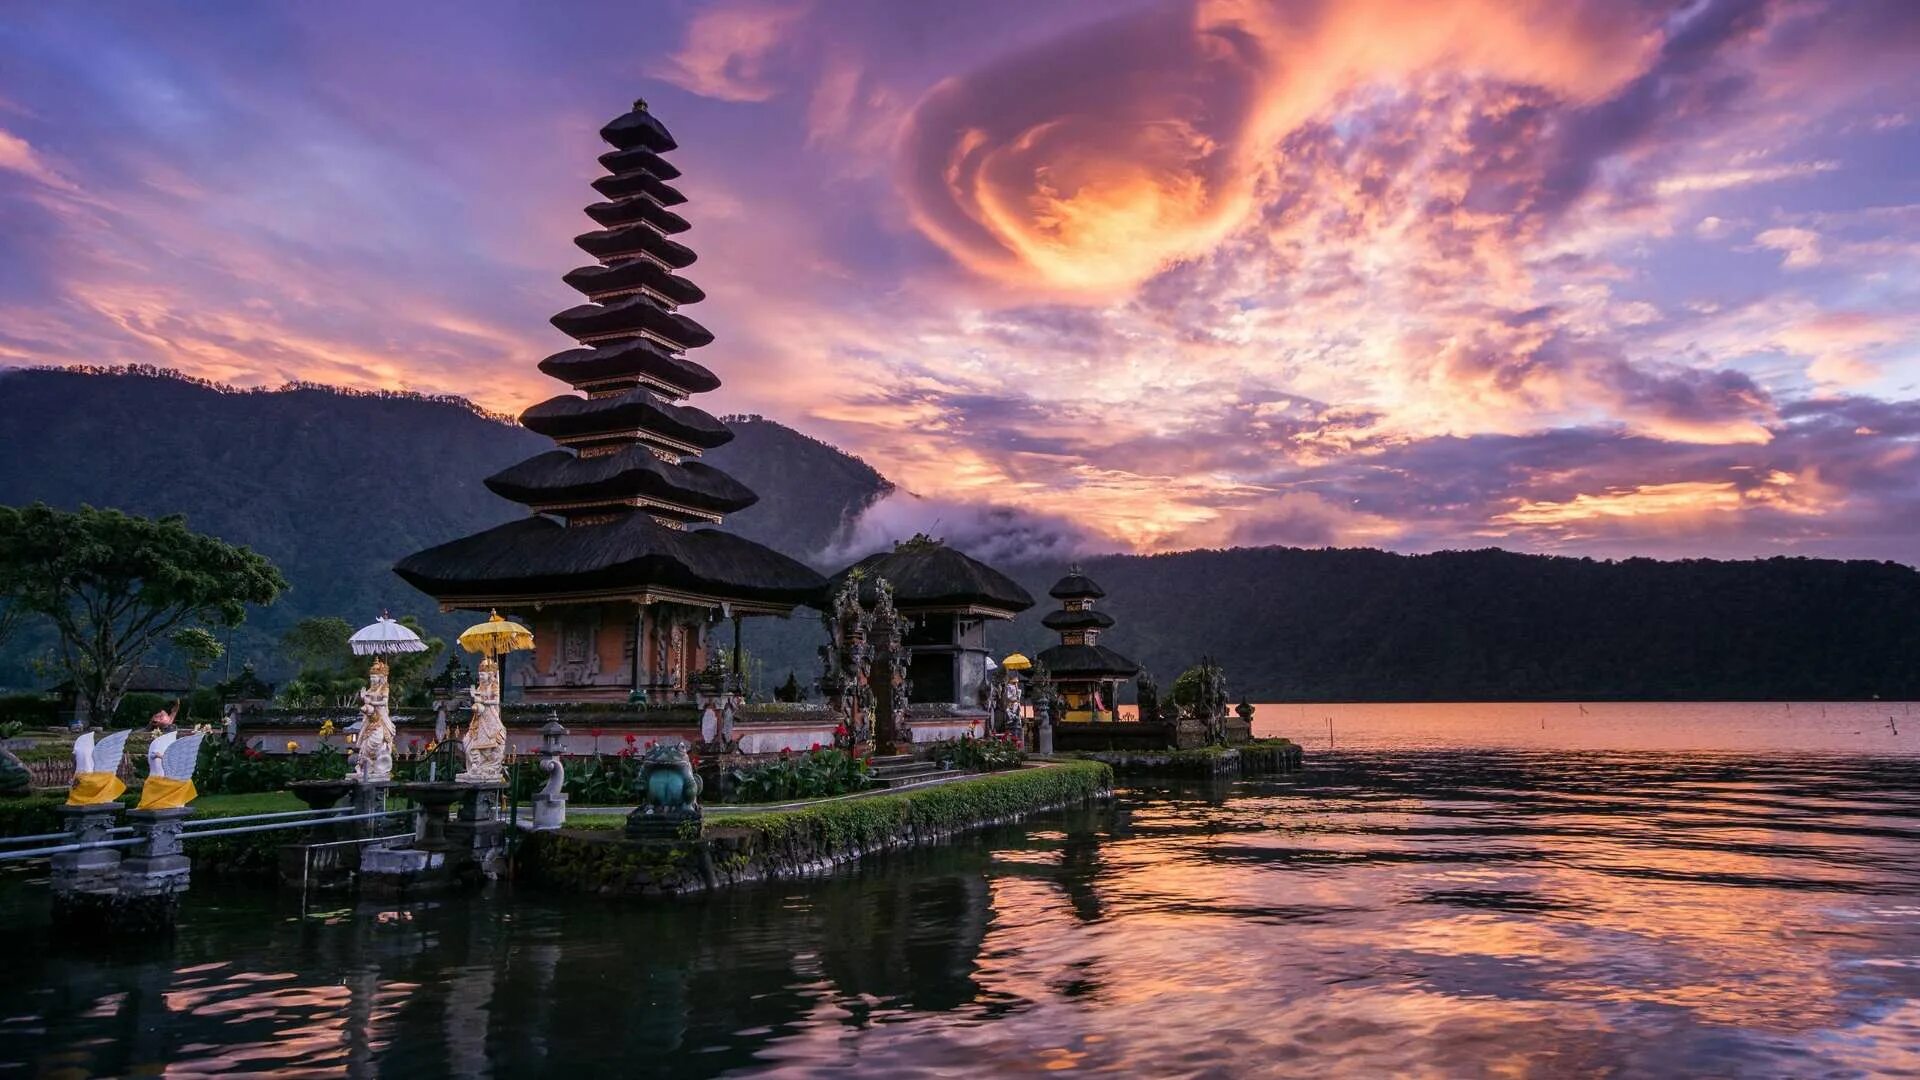 Площадь бали. Улун дану Бали. Бали (остров в малайском архипелаге). Храм Пура улун дану. Храм улун дану Батур.